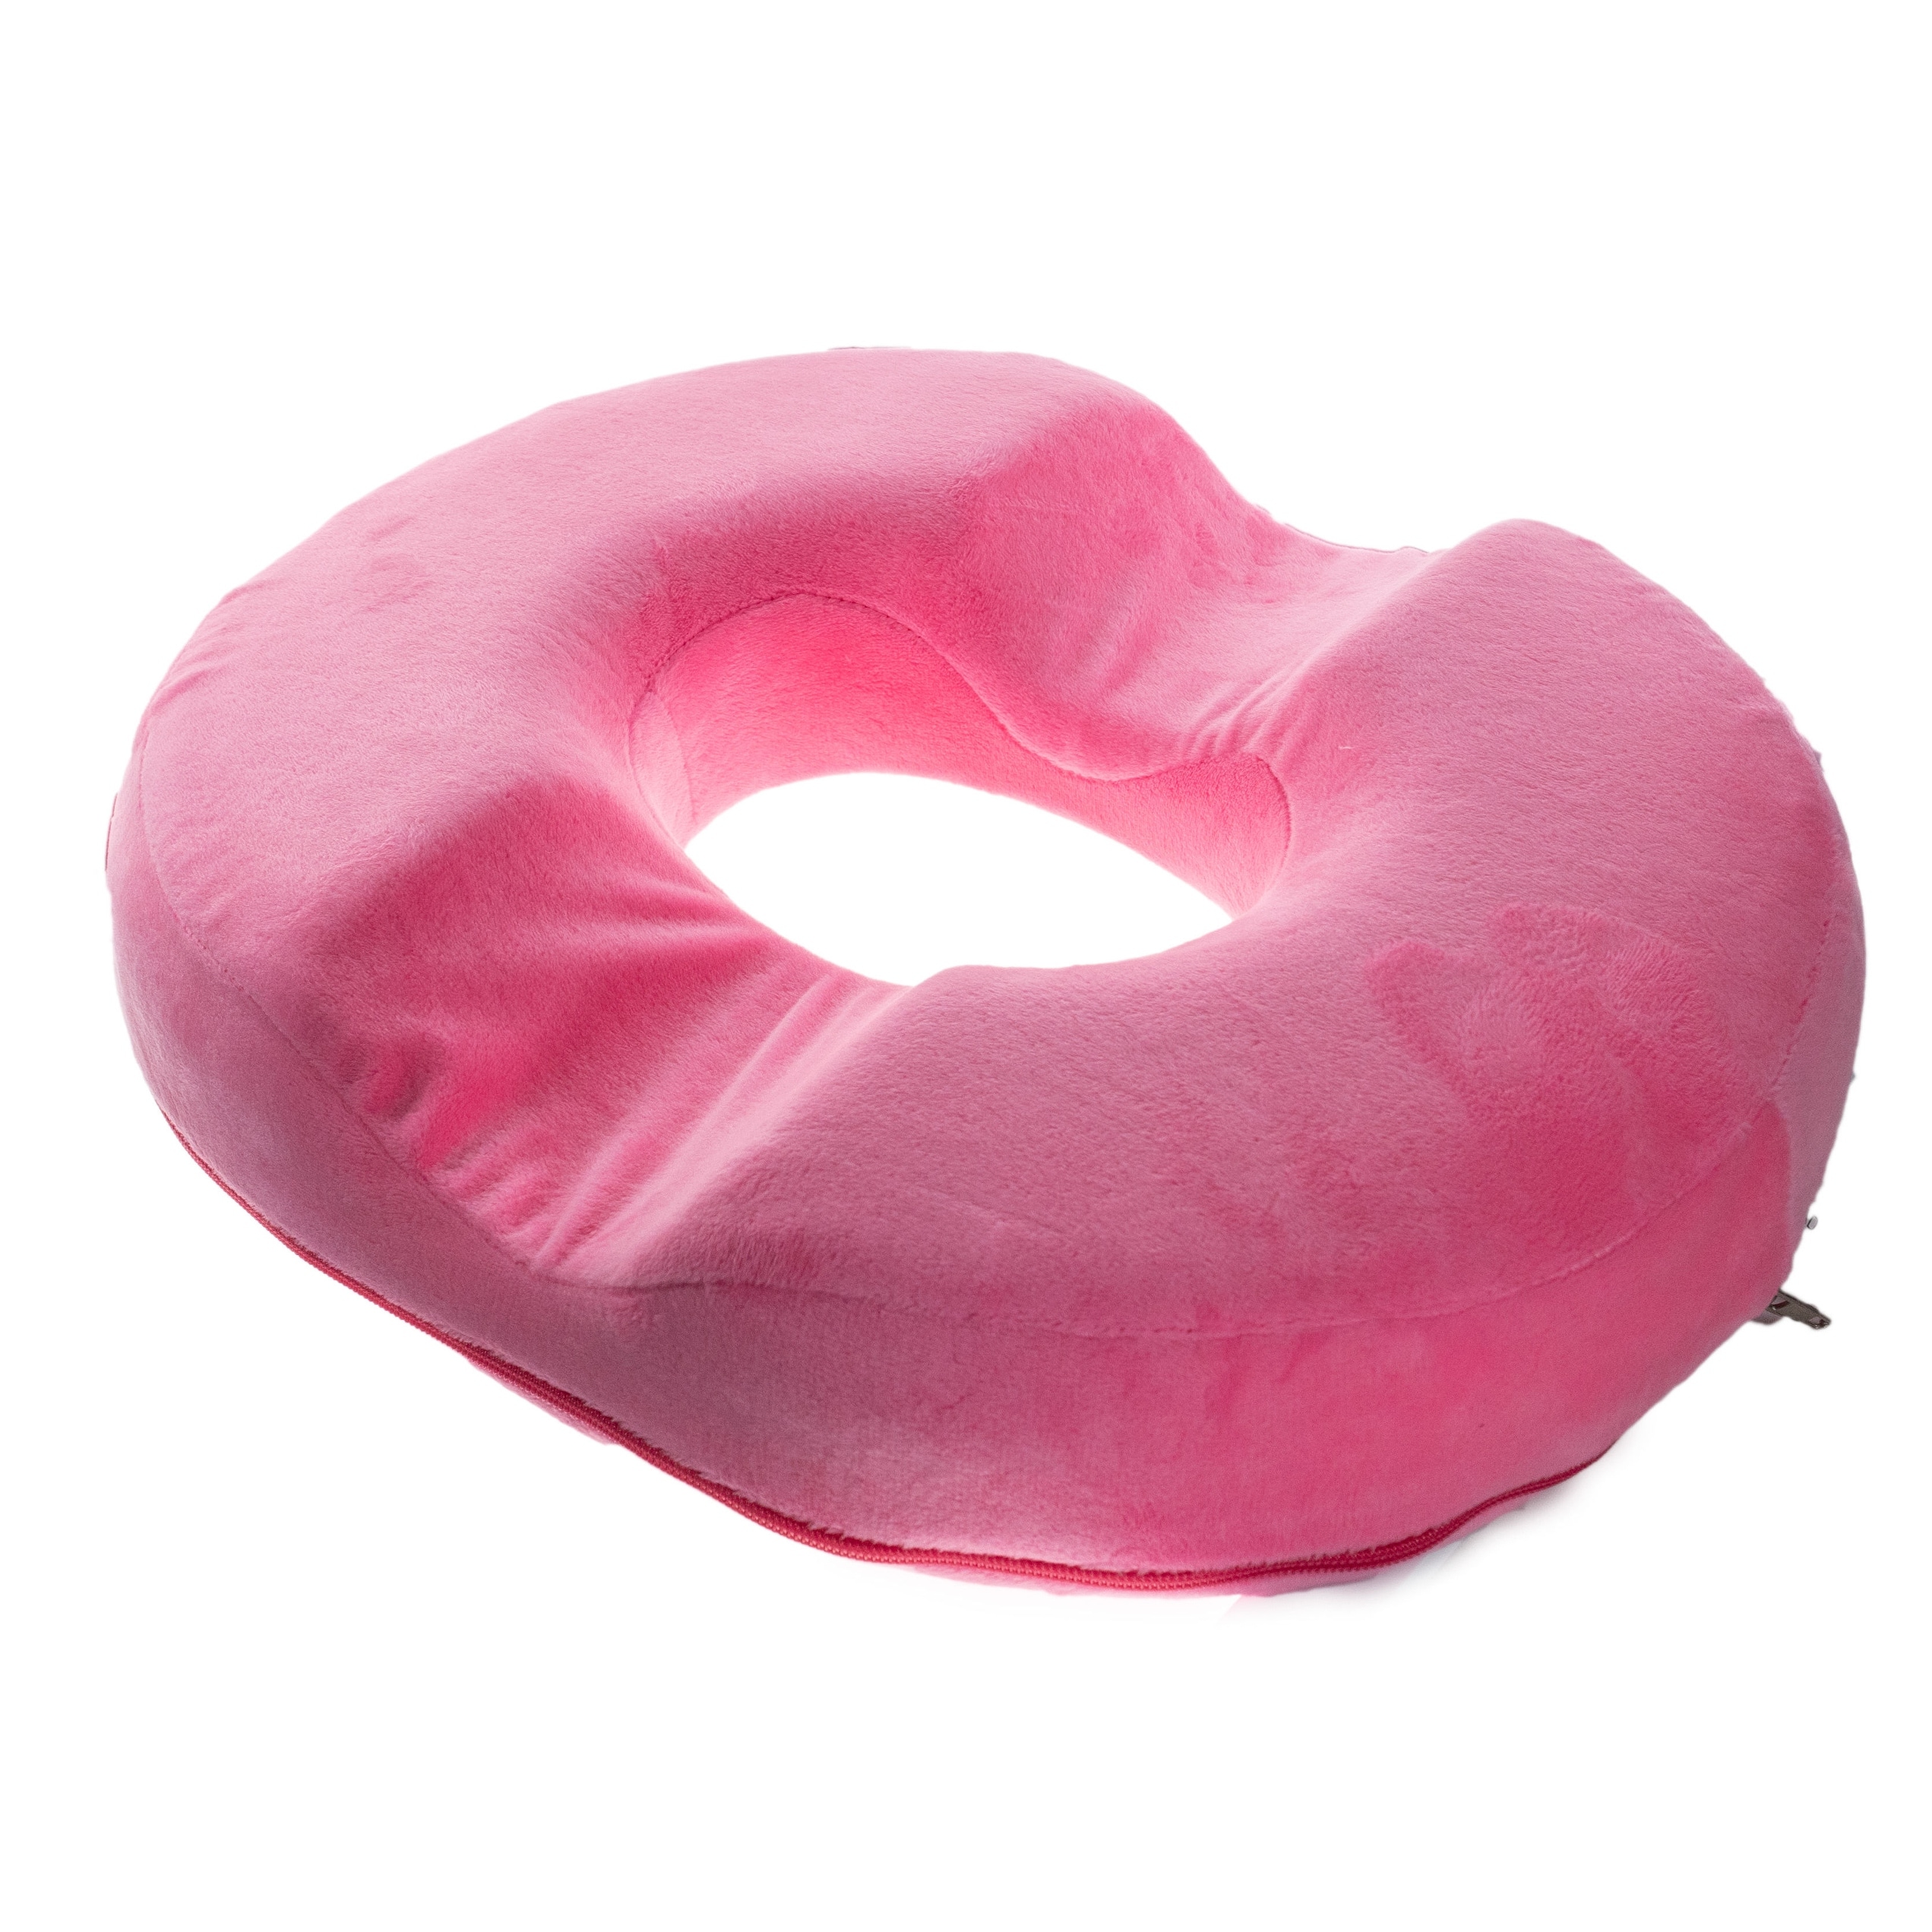 Donut Luxury Seat Cushion Memory Foam Pillow Hemorrhoids